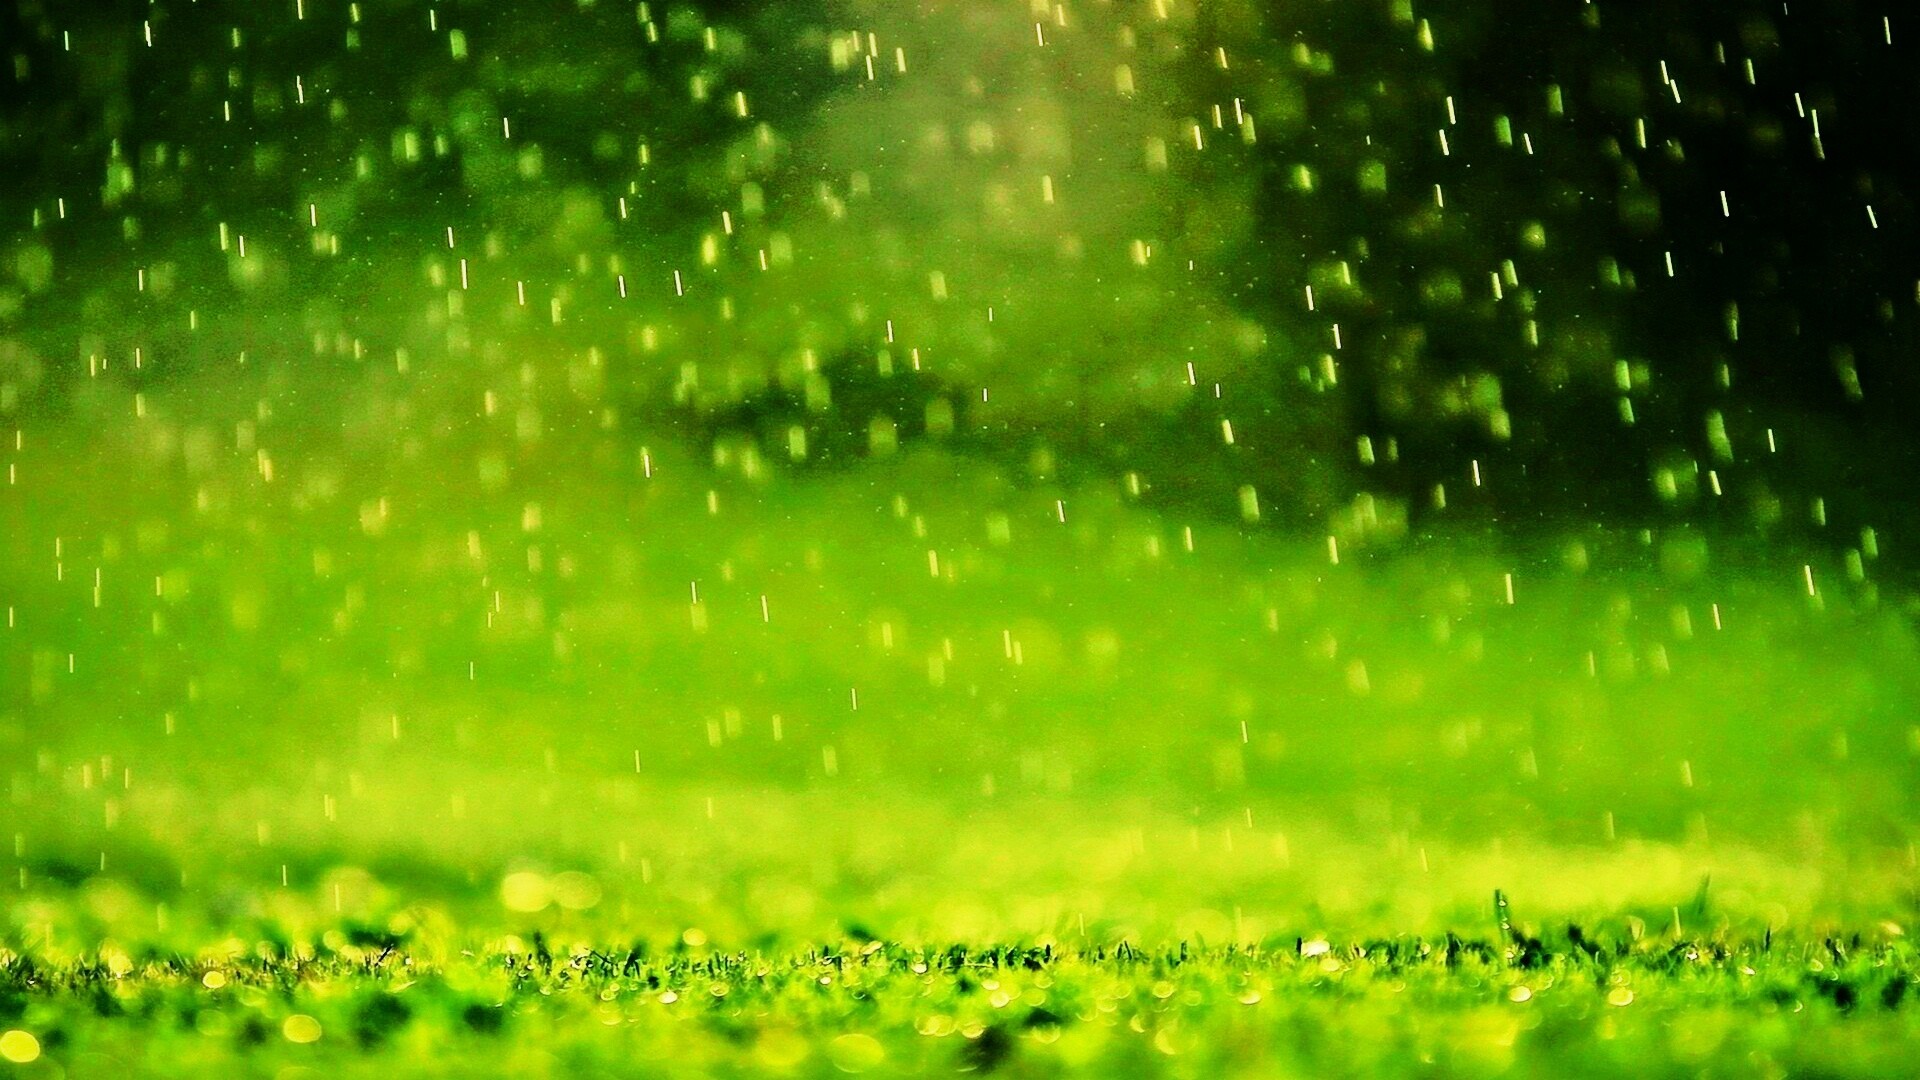 1920x1080 Izobilje kiÅ¡e a manjak biljaka kao predznak Sudnjeg dana ...Beautiful Rain  Drops Wallpapers